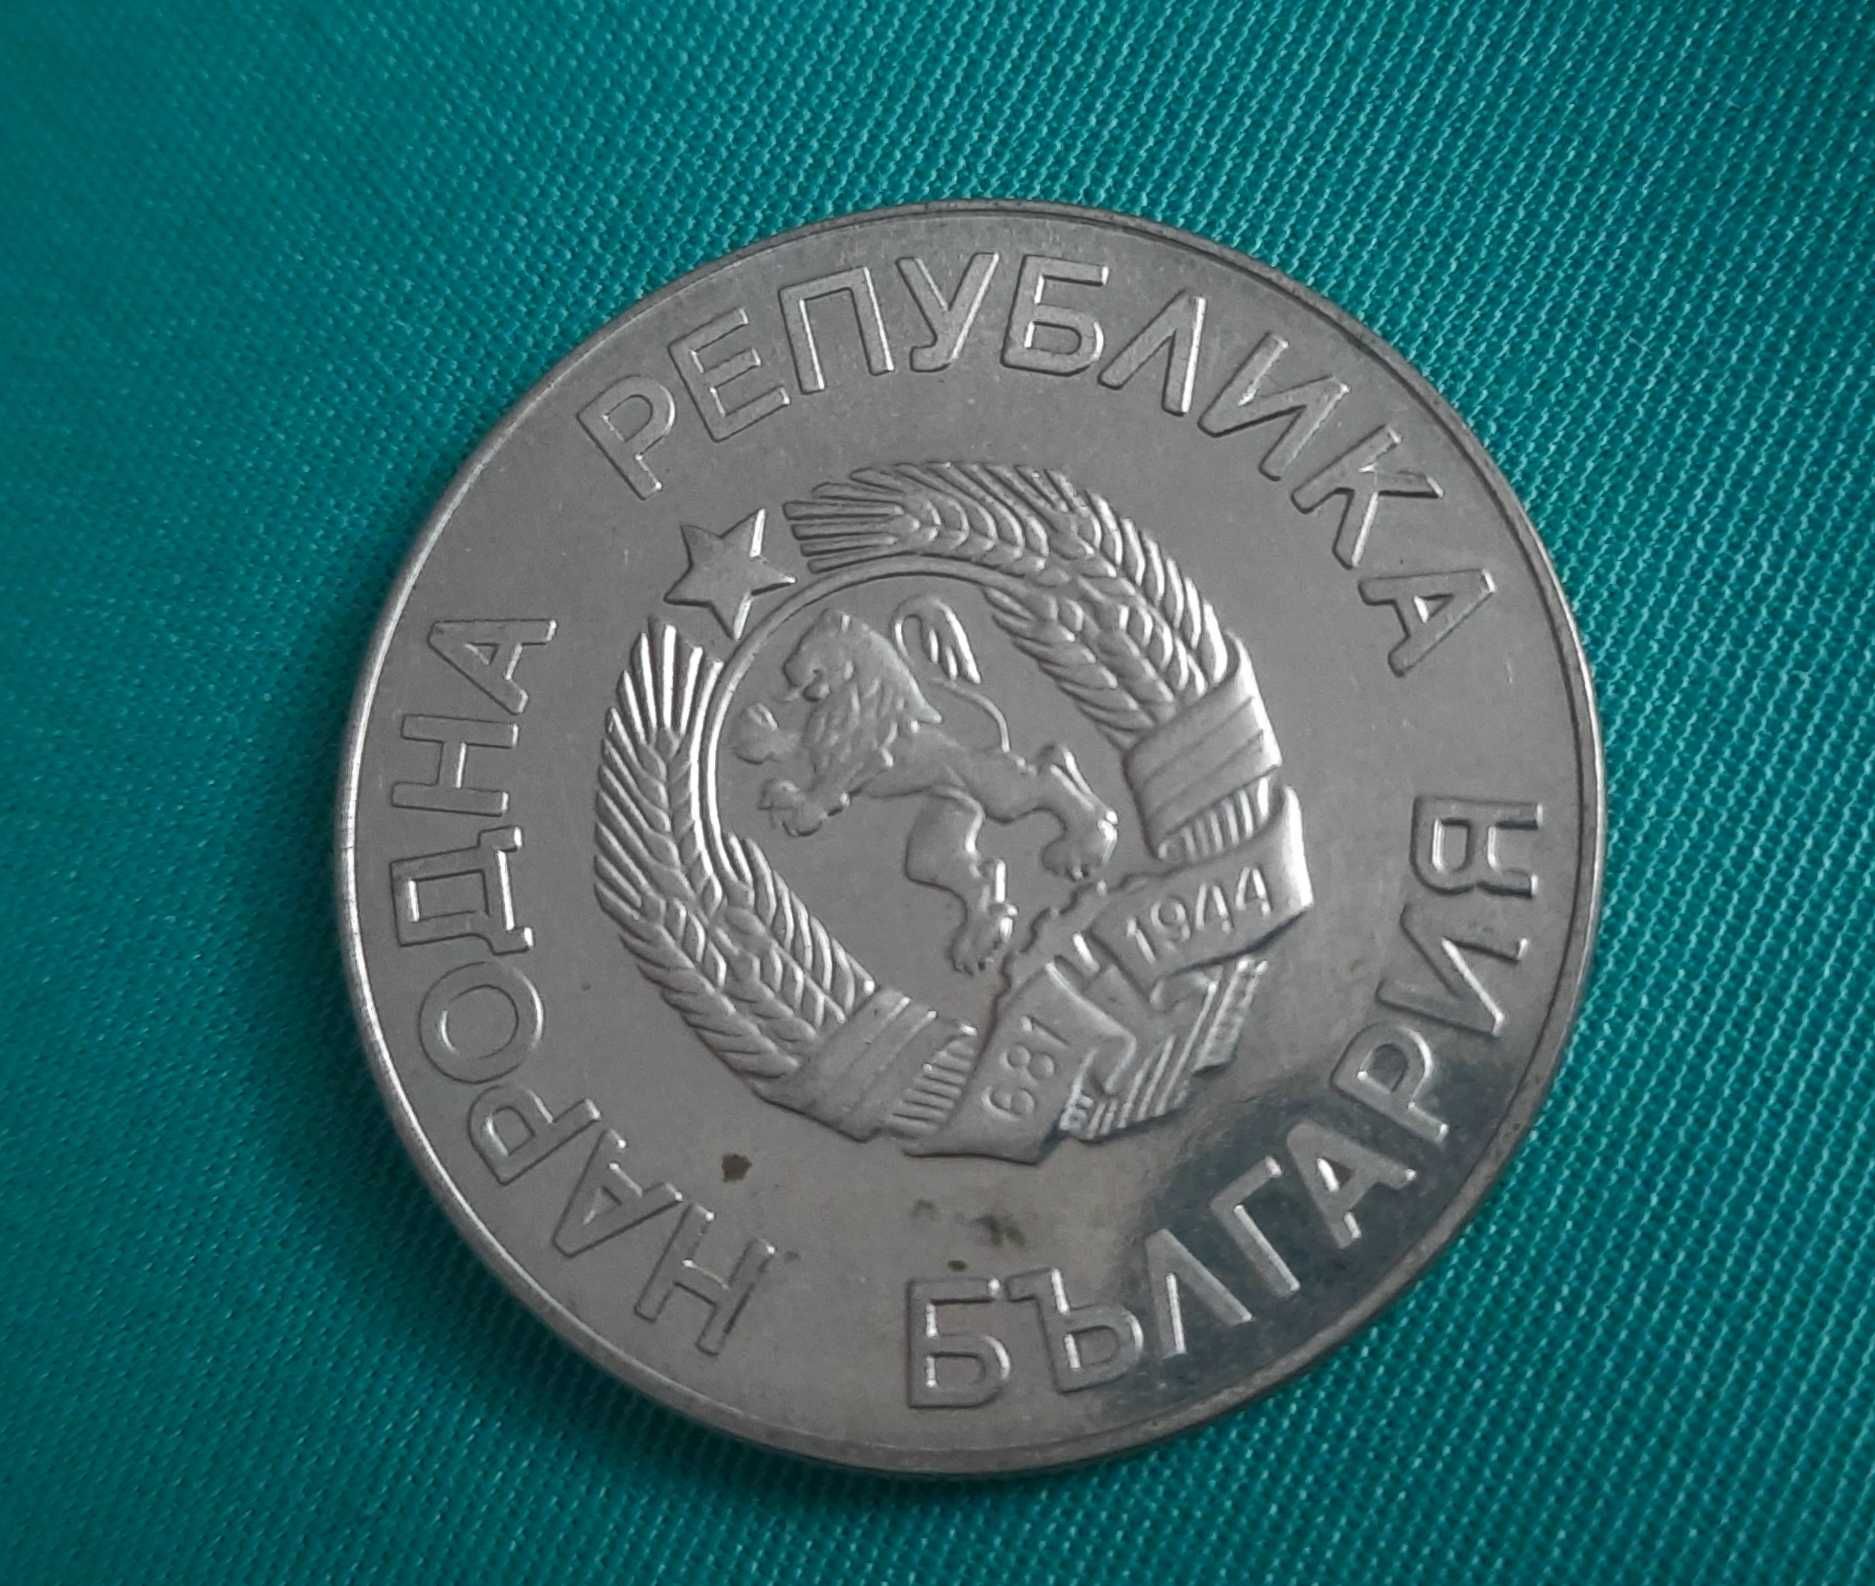 Юбилейни монети посребрени пет броя